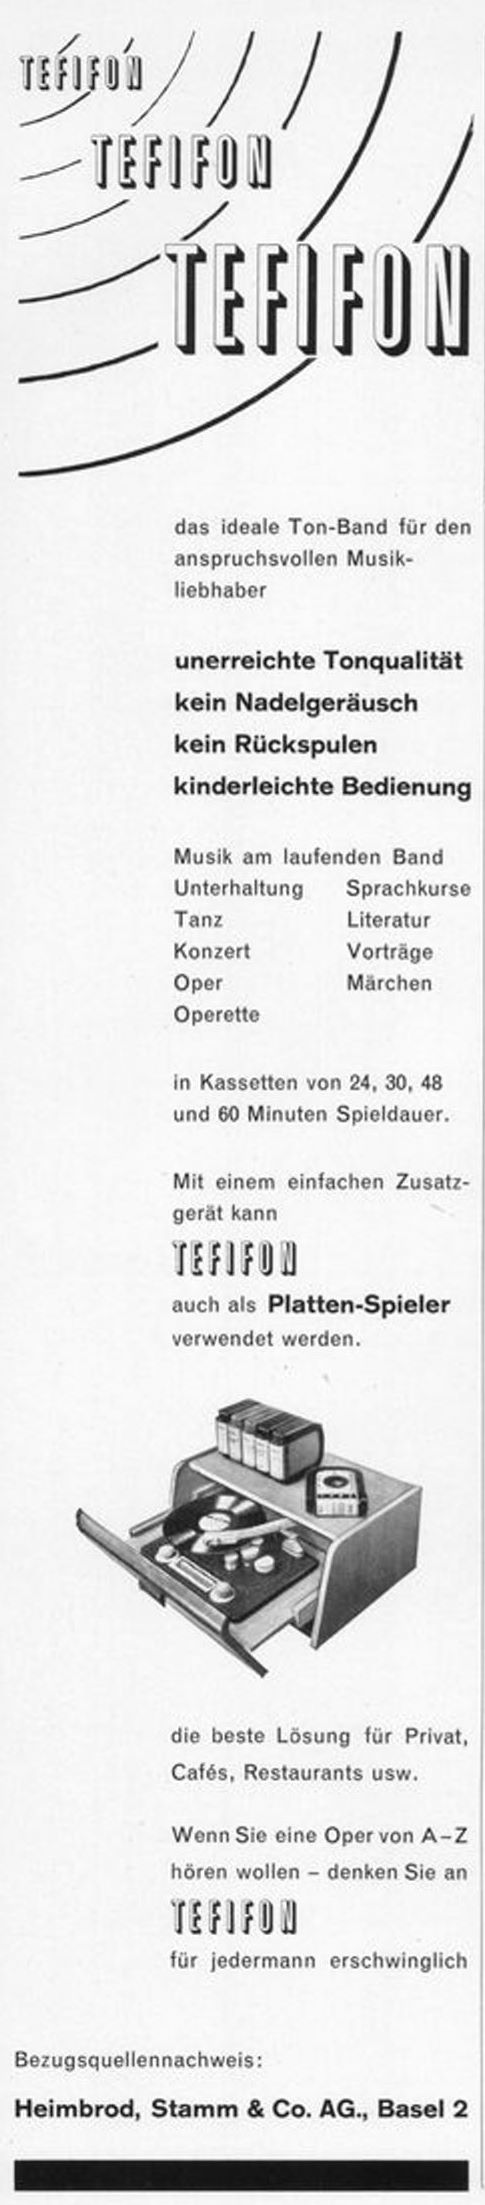 Tefifon 1952 1.jpg